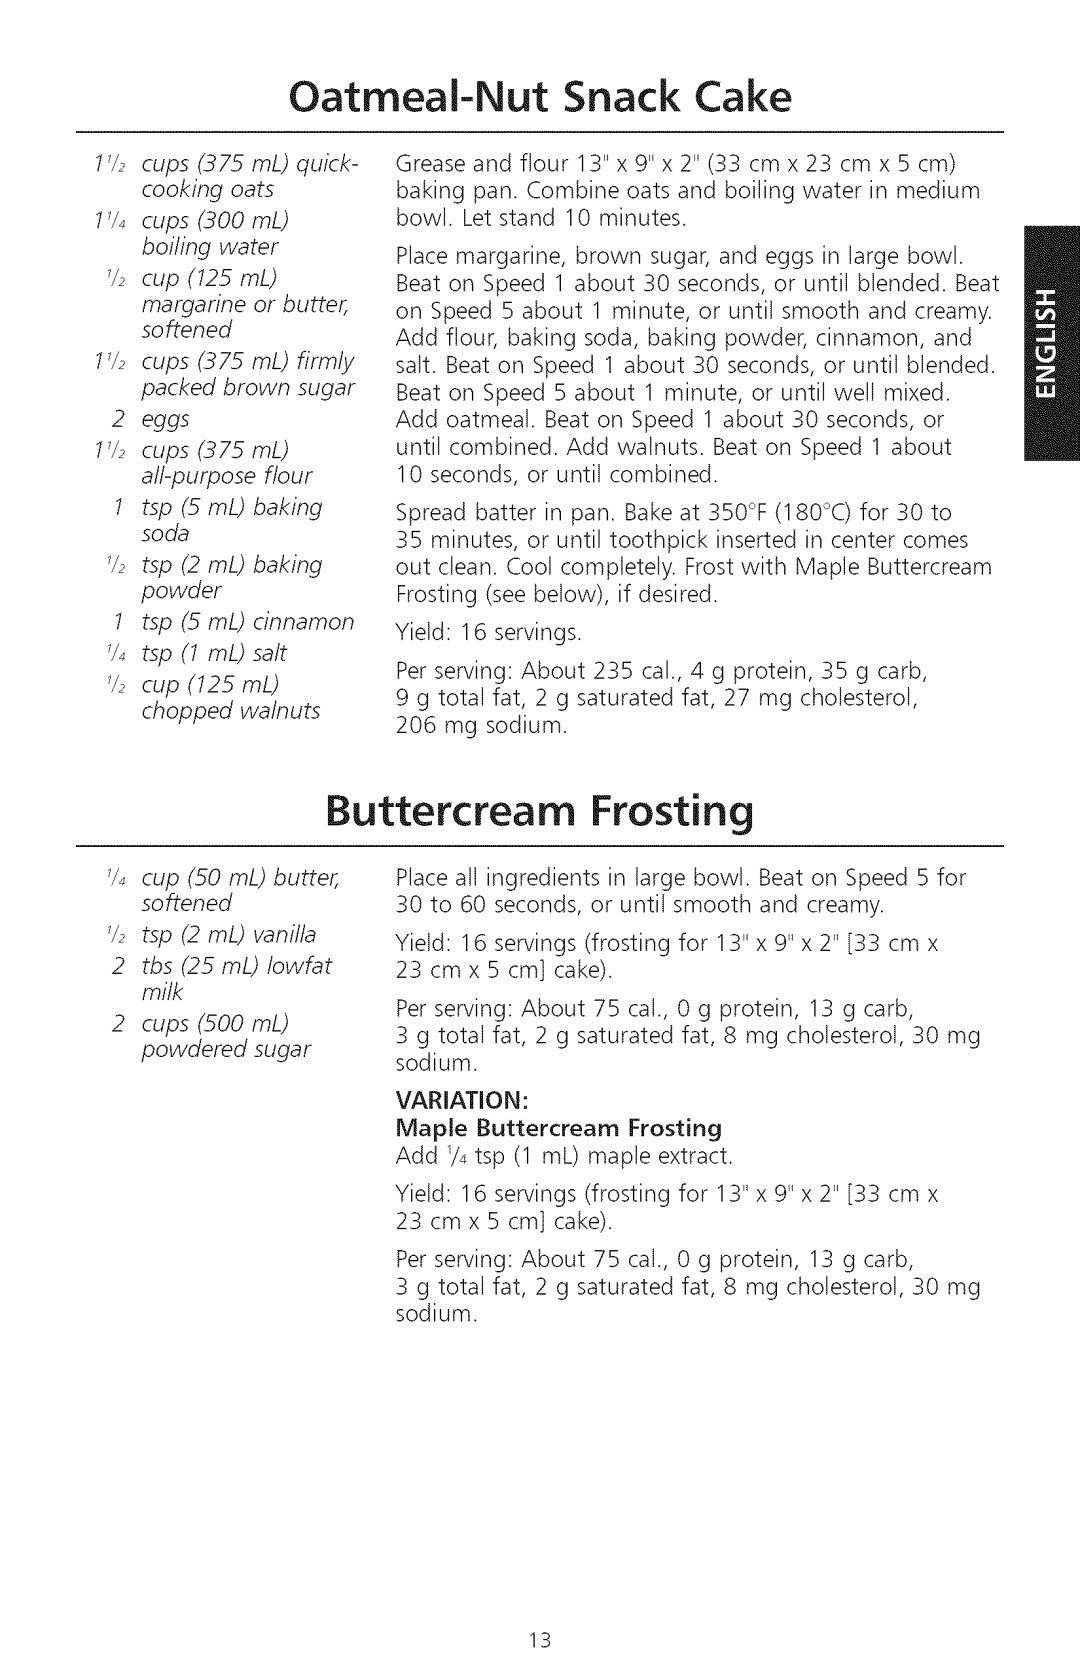 KitchenAid KHM720, KHM920 manual Oatmeal-Nut Snack Cake, Buttercream Frosting 